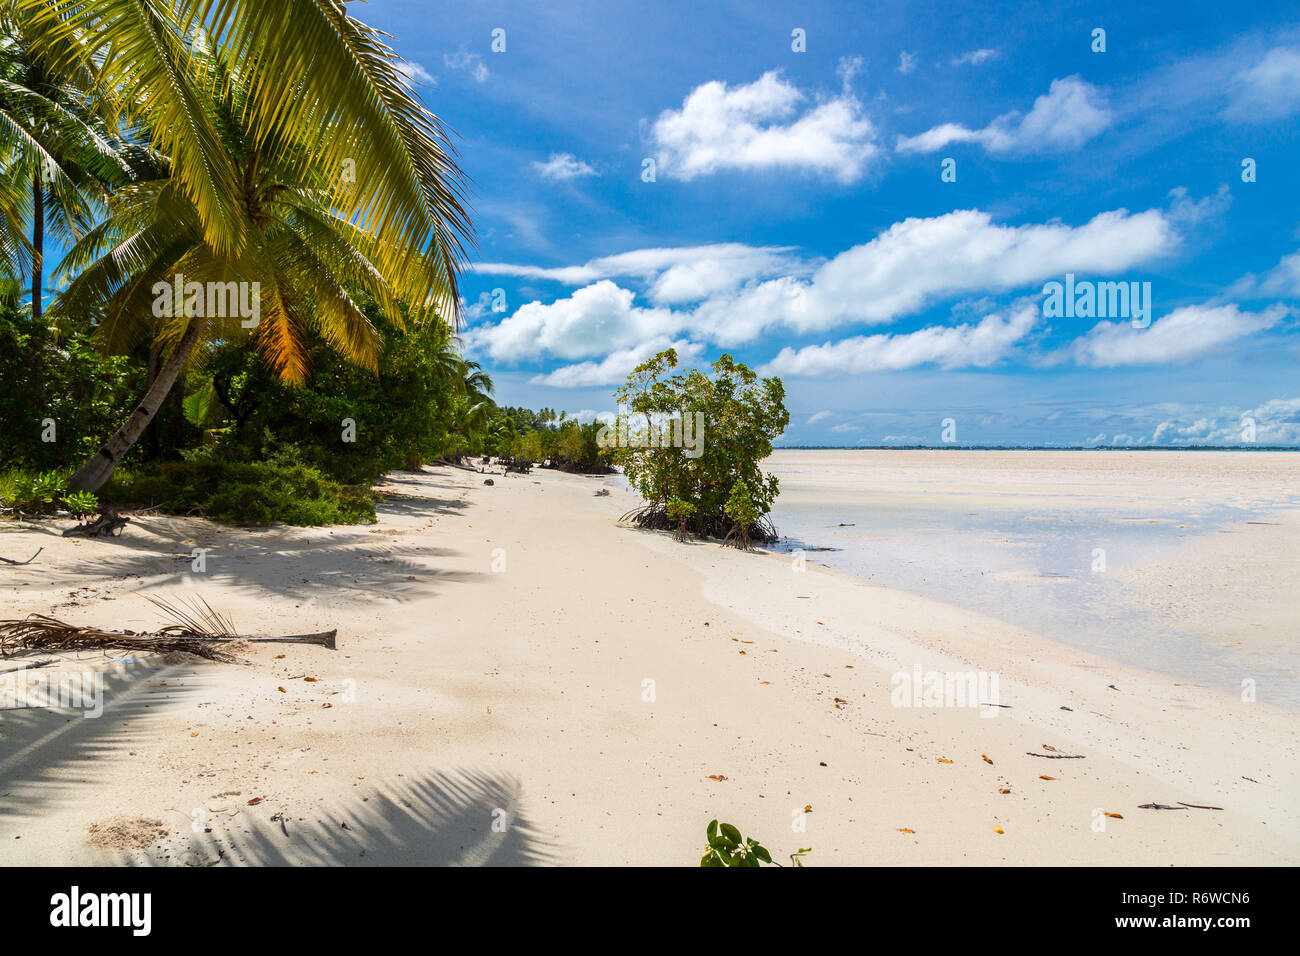 Sandy paradise beach of azure turquoise blue shallow lagoon, North Tarawa atoll, Kiribati, Gilbert Islands, Micronesia, Oceania. Palm trees, mangroves Stock Photo